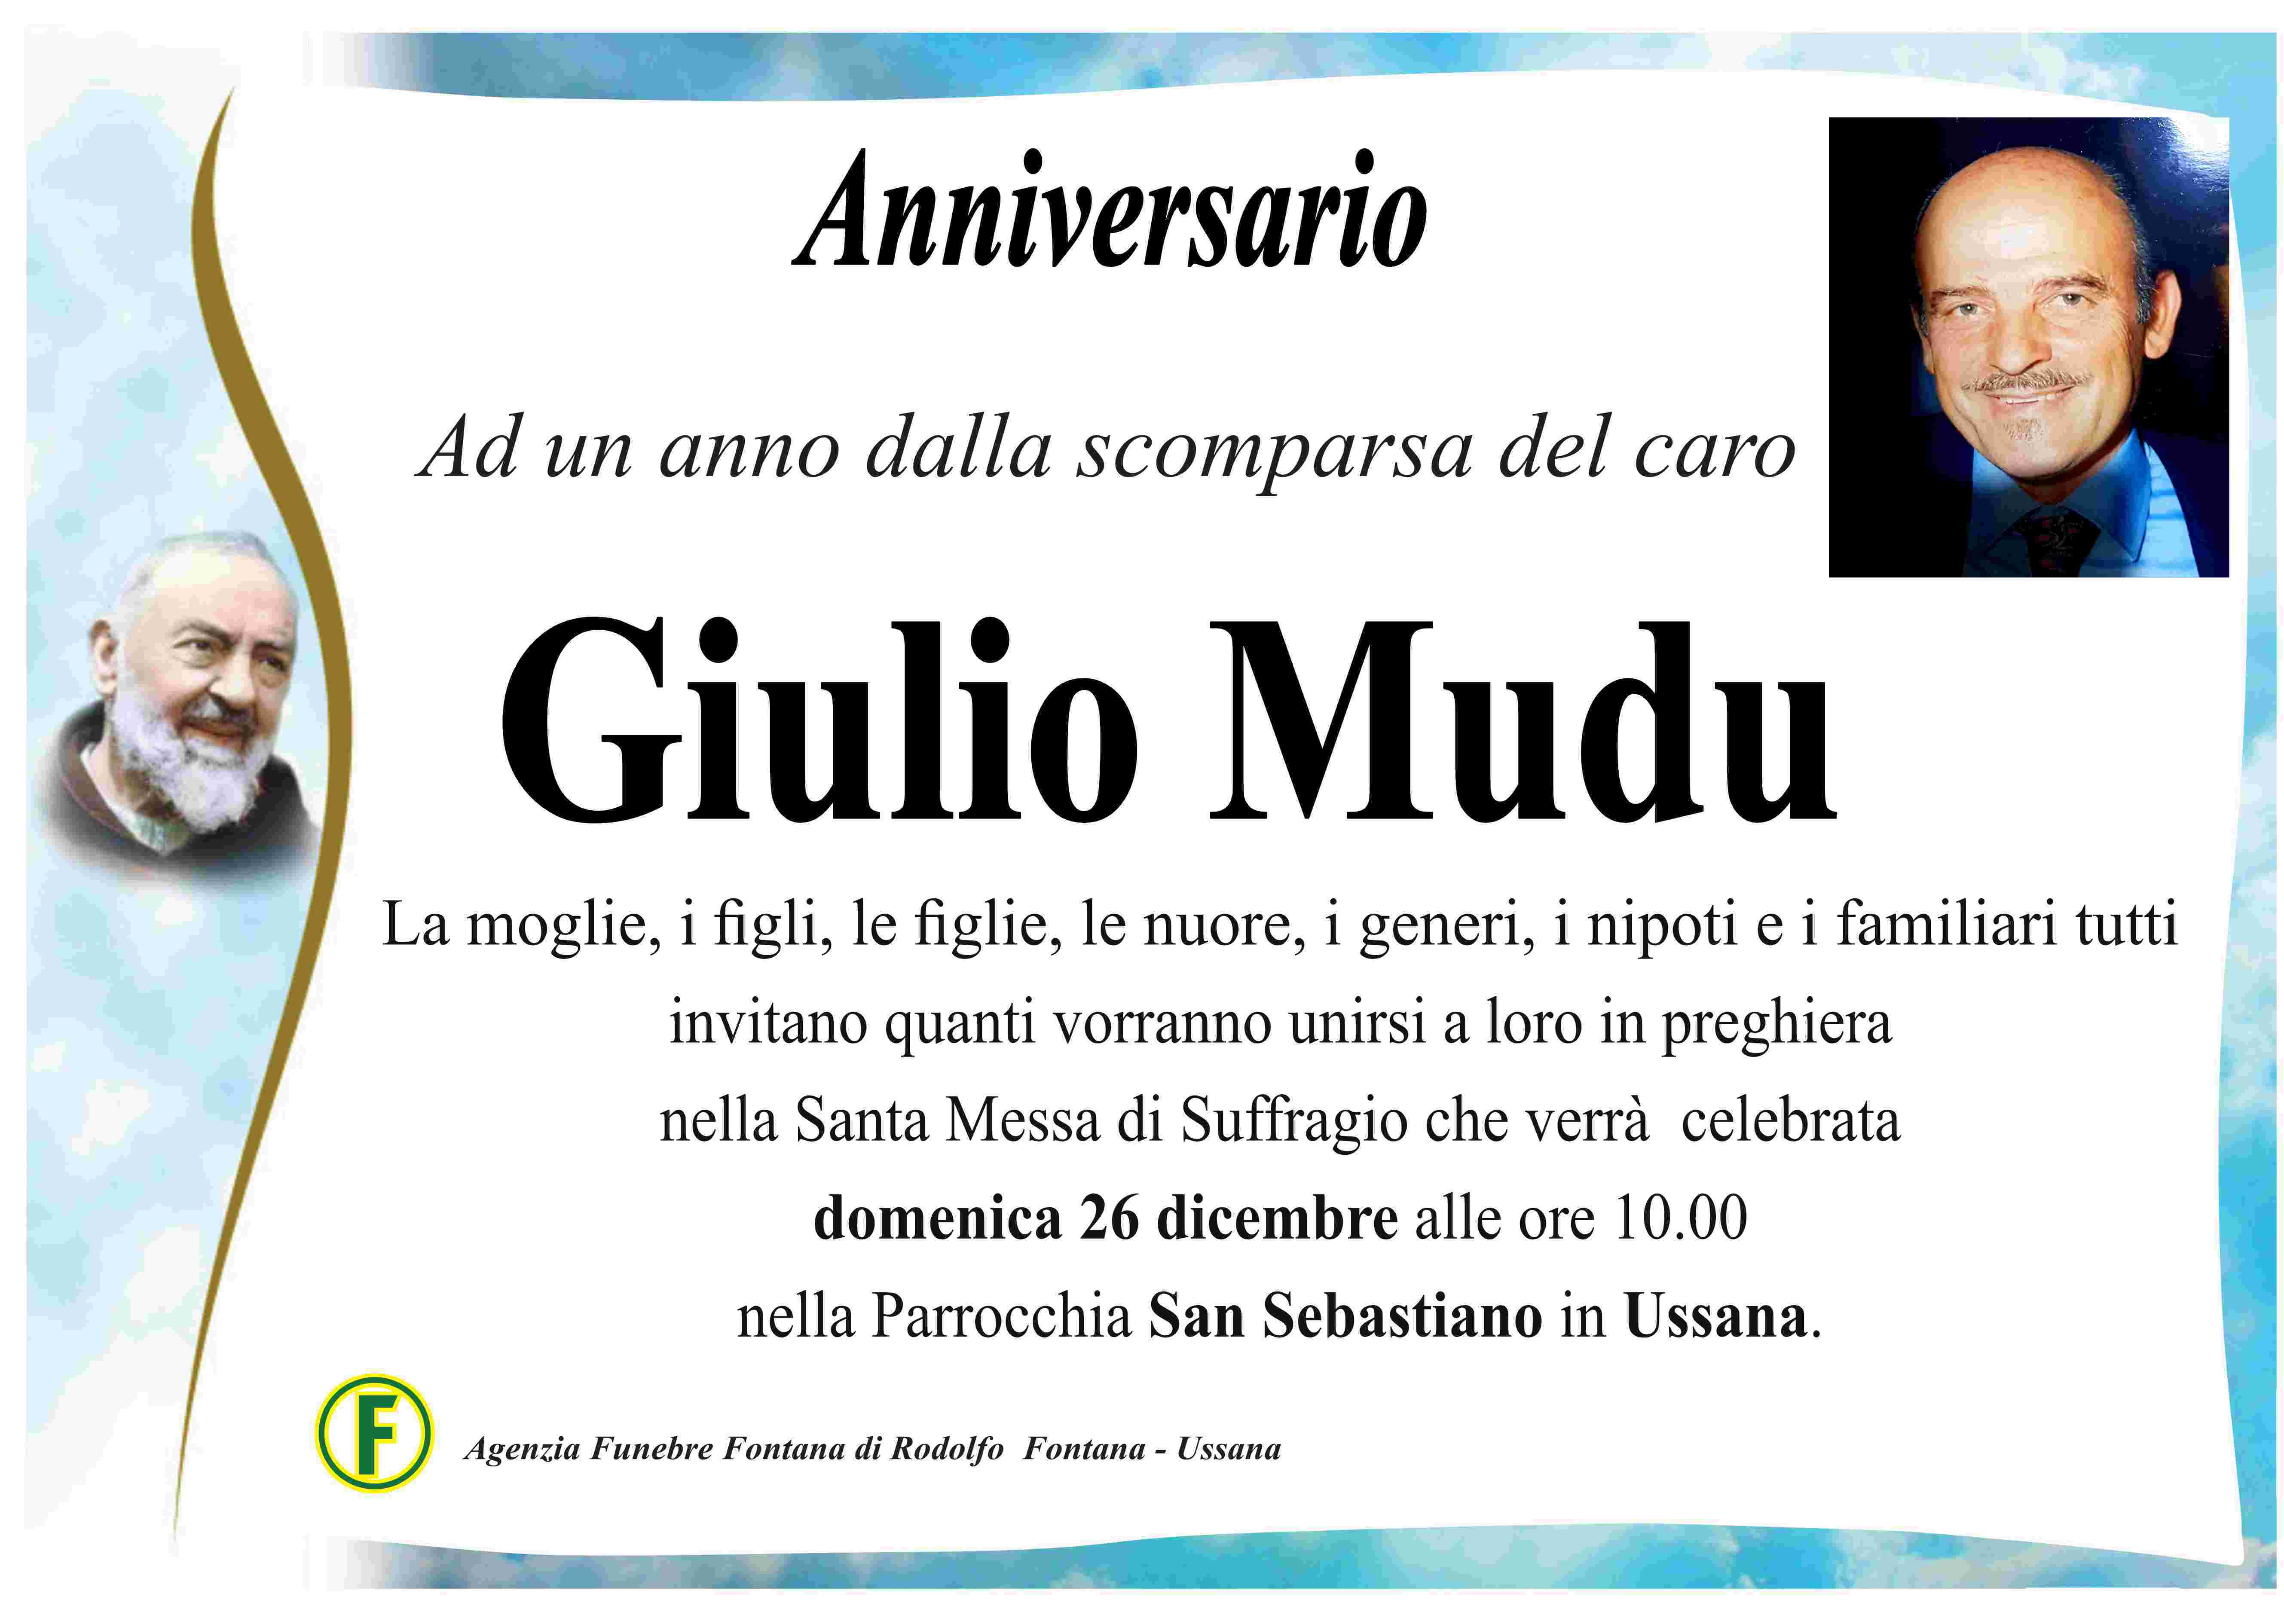 Giulio Mudu